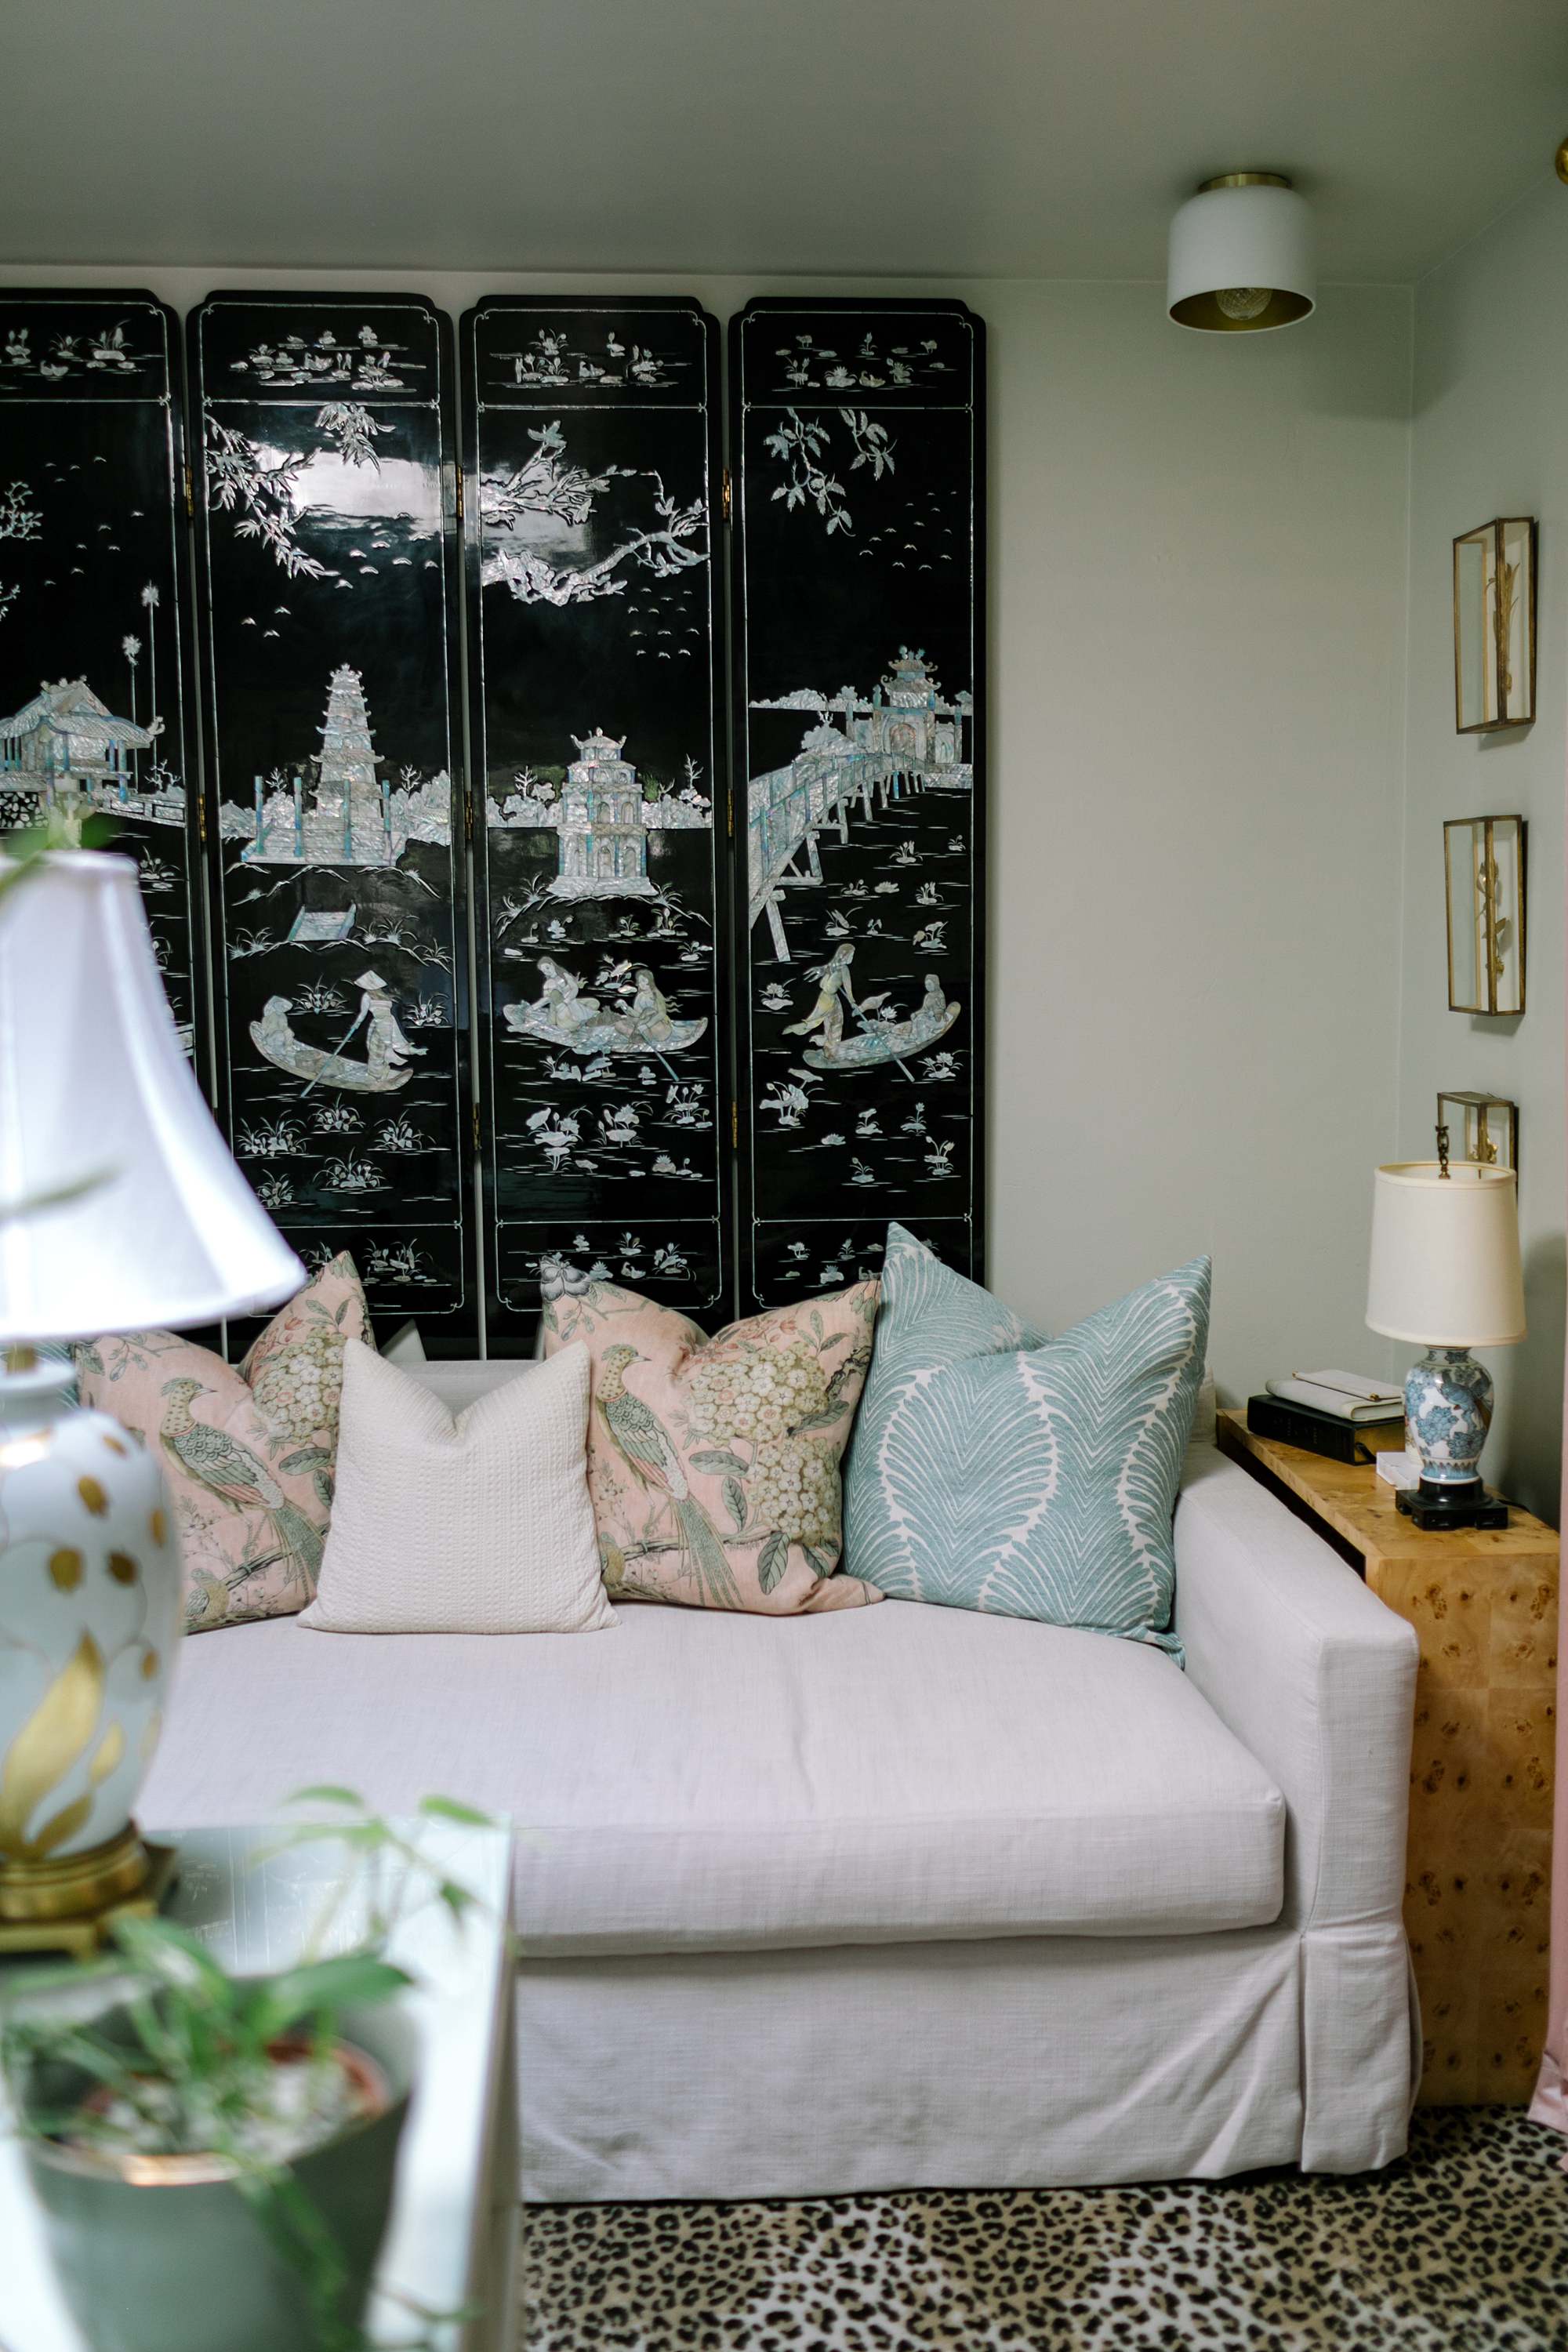 leopard wool carpet in home office mother of pearl oriental screen vintage from eBay grandmillennial style